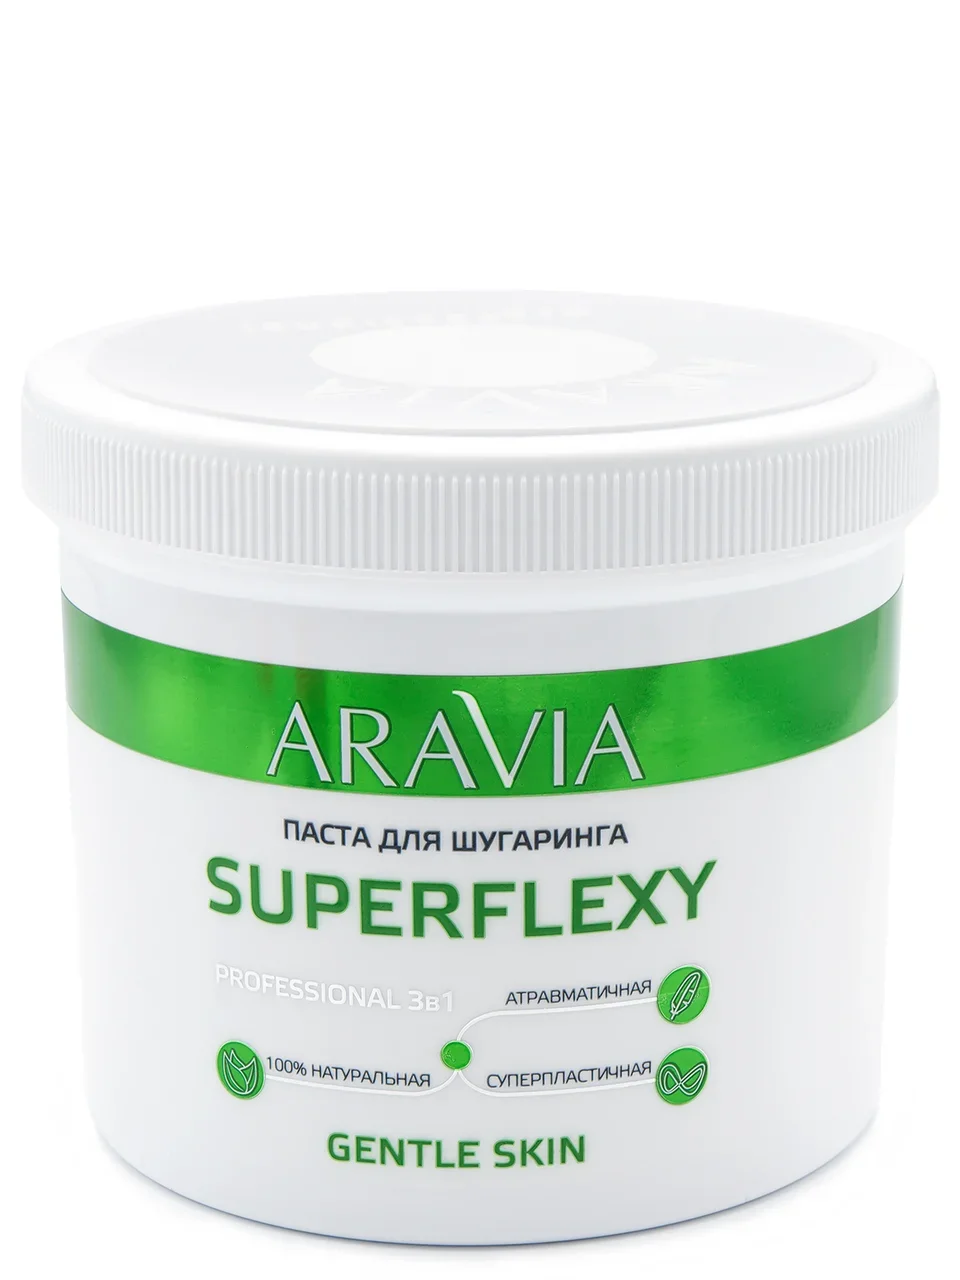 Паста для шугаринга Aravia Professional Superflexy Gentle Skin 750 г